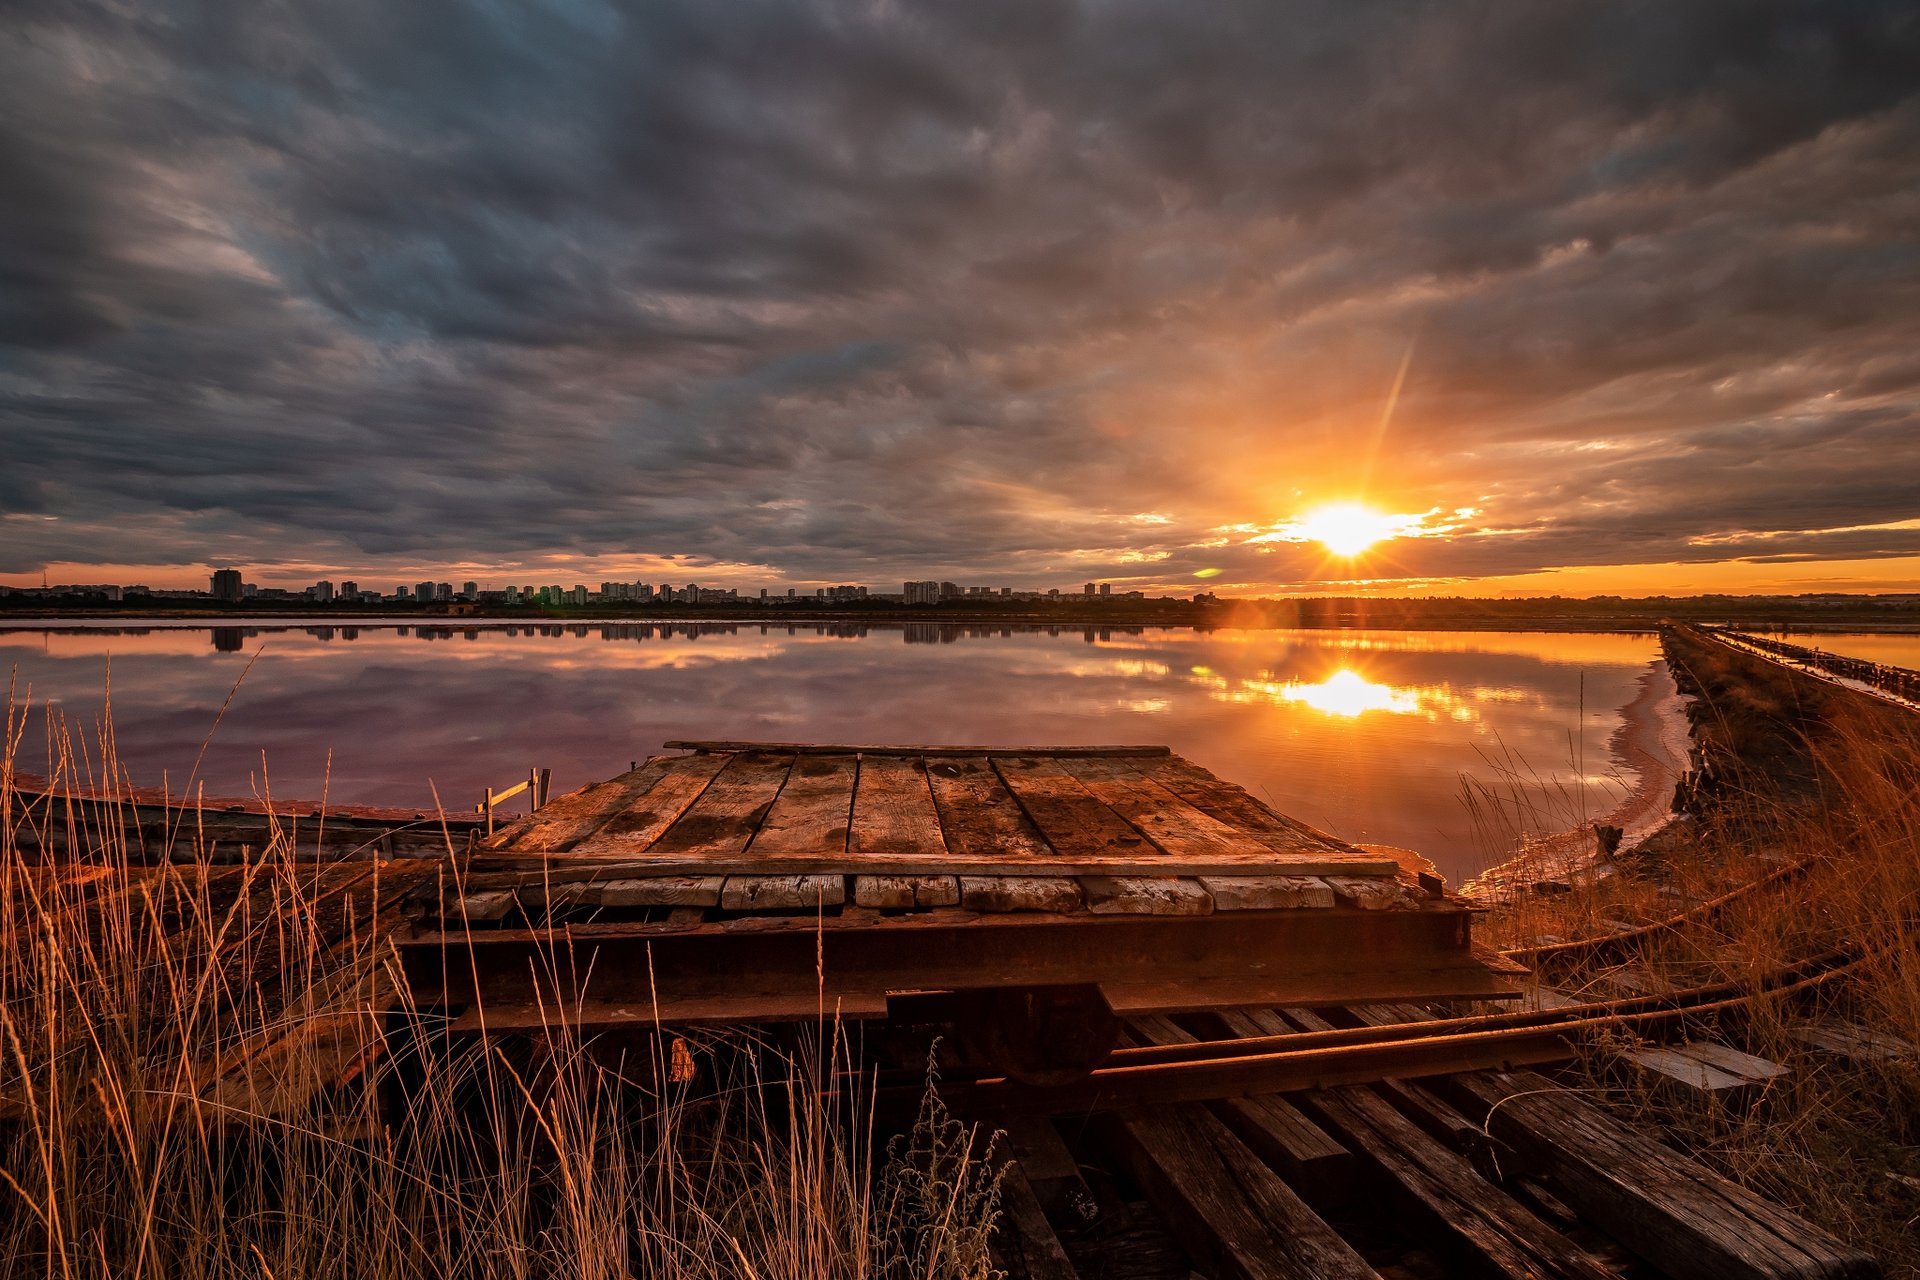 Photo in Landscape | Author Todor Todorov - skyblue | PHOTO FORUM